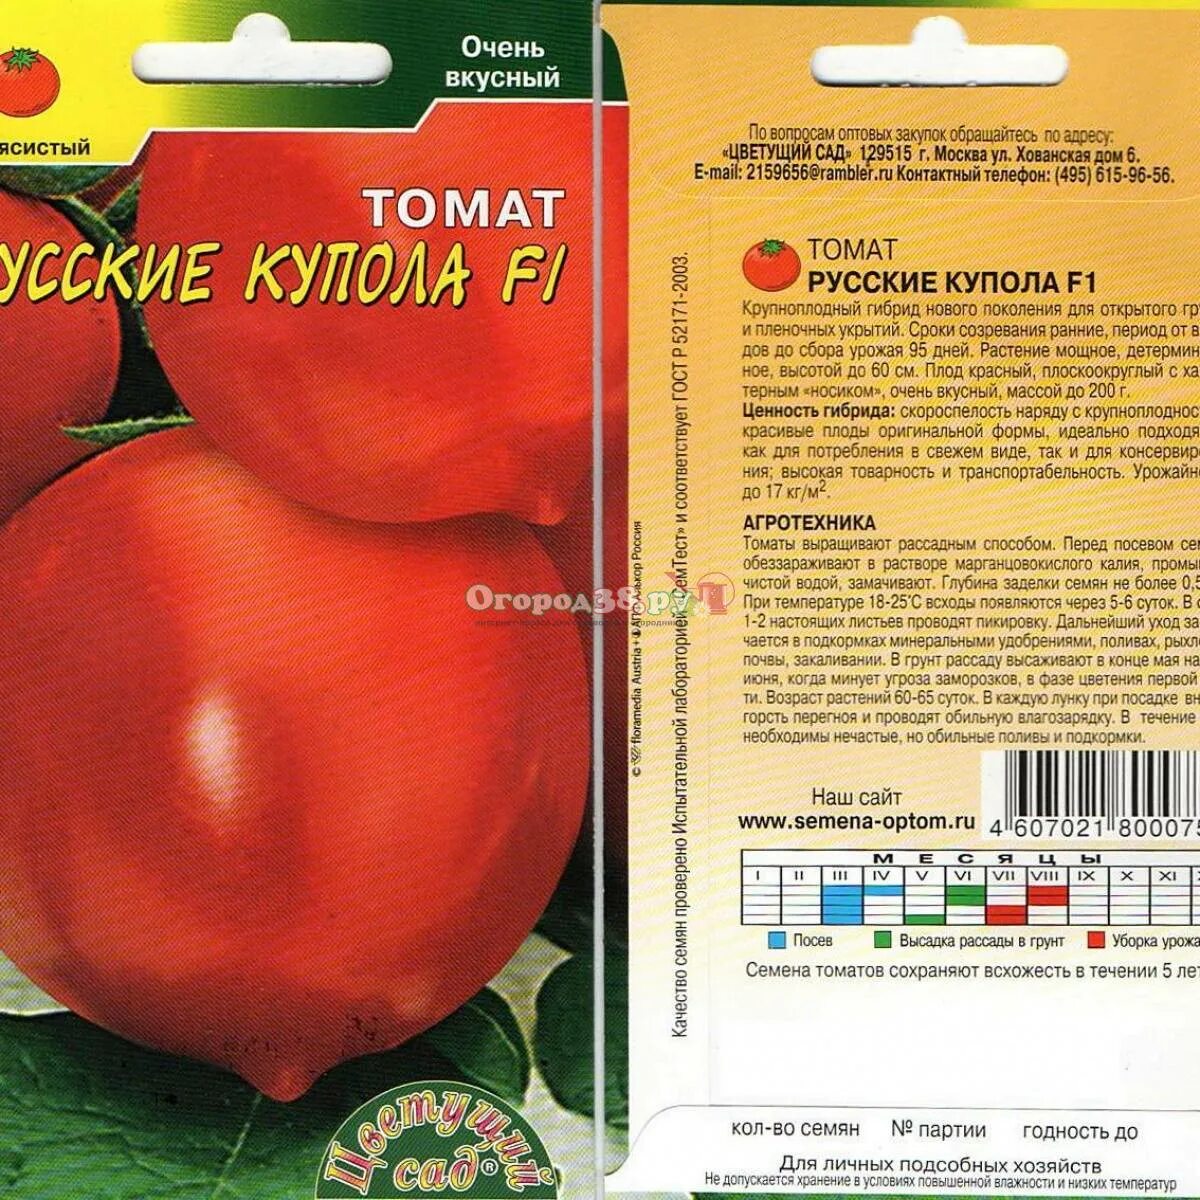 Семена томат русские купола f1. Томат малиновые купола f1. Томат красный купол f1. Томат Обские купола характеристика.